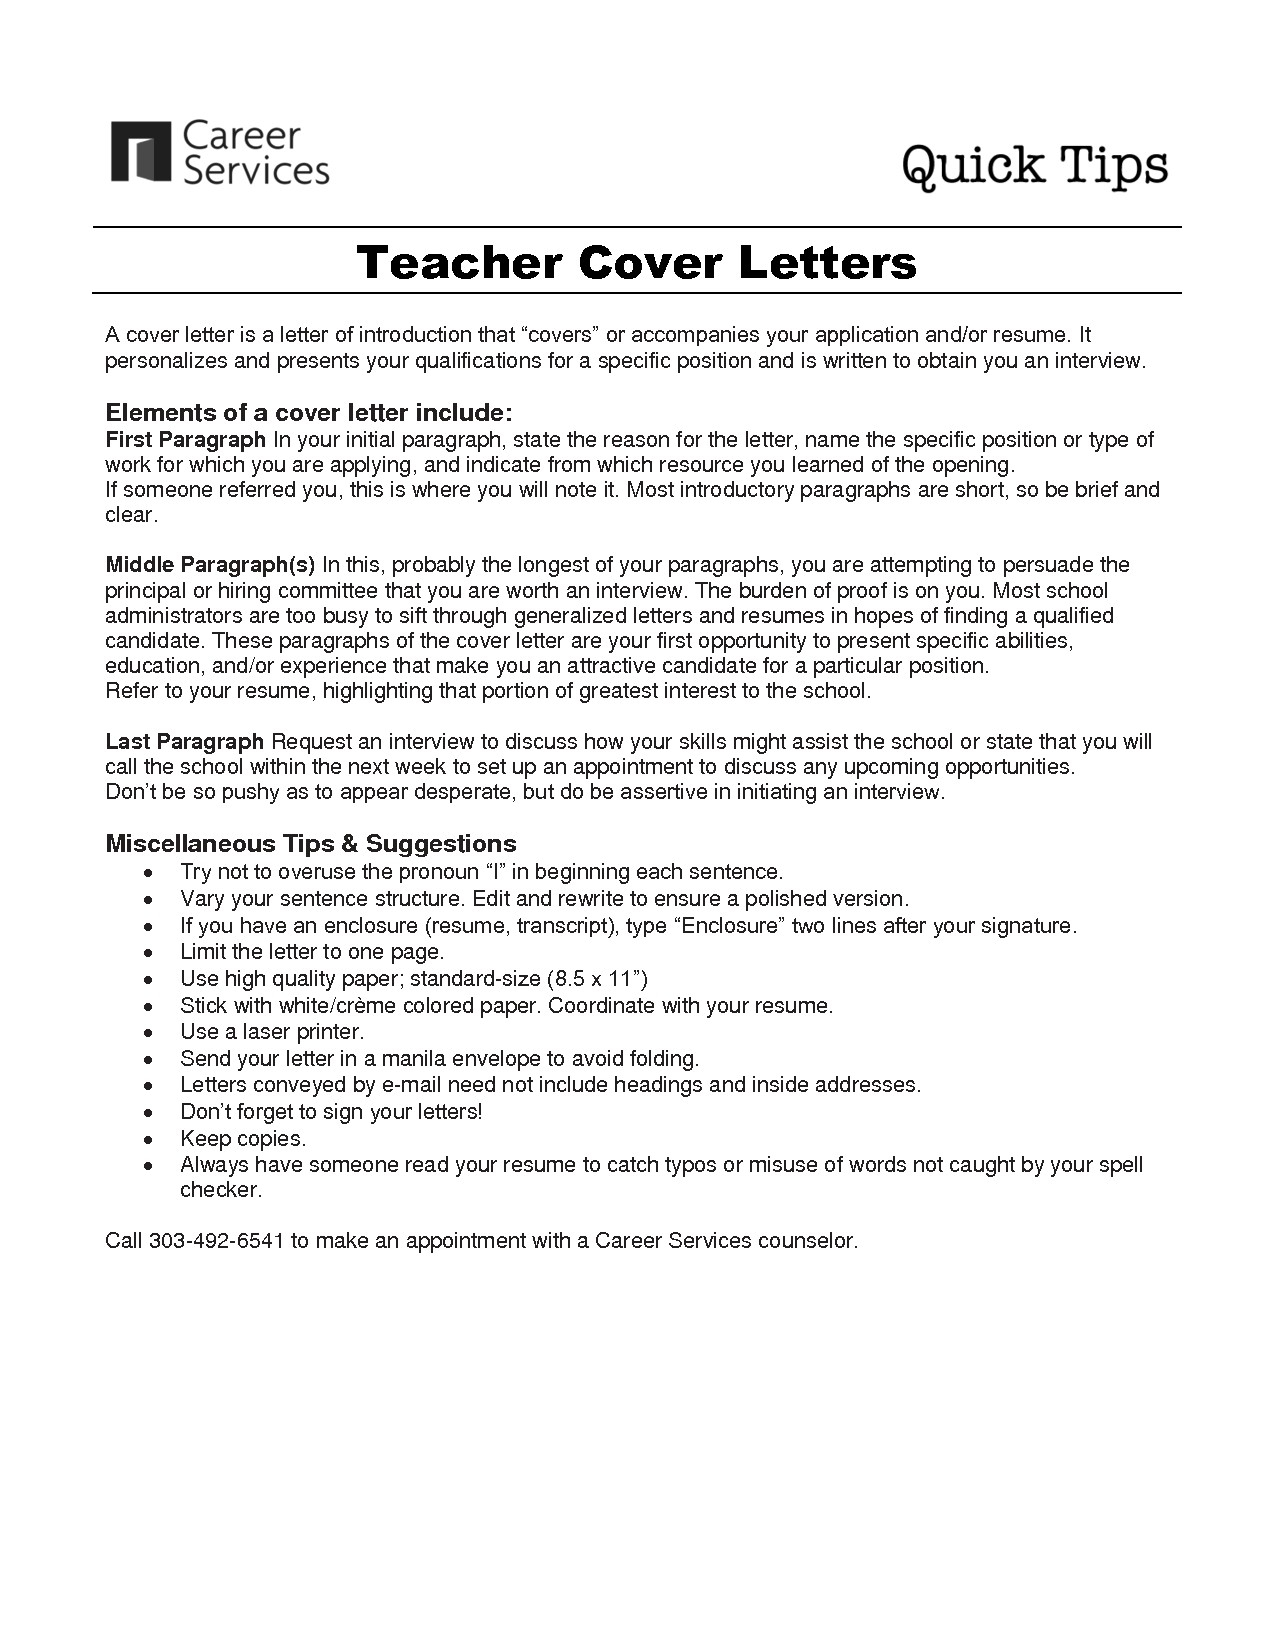 Teaching Cover Letter Examples Cover Letter Samples Teacher Save Pin Leah Weitzsacker On